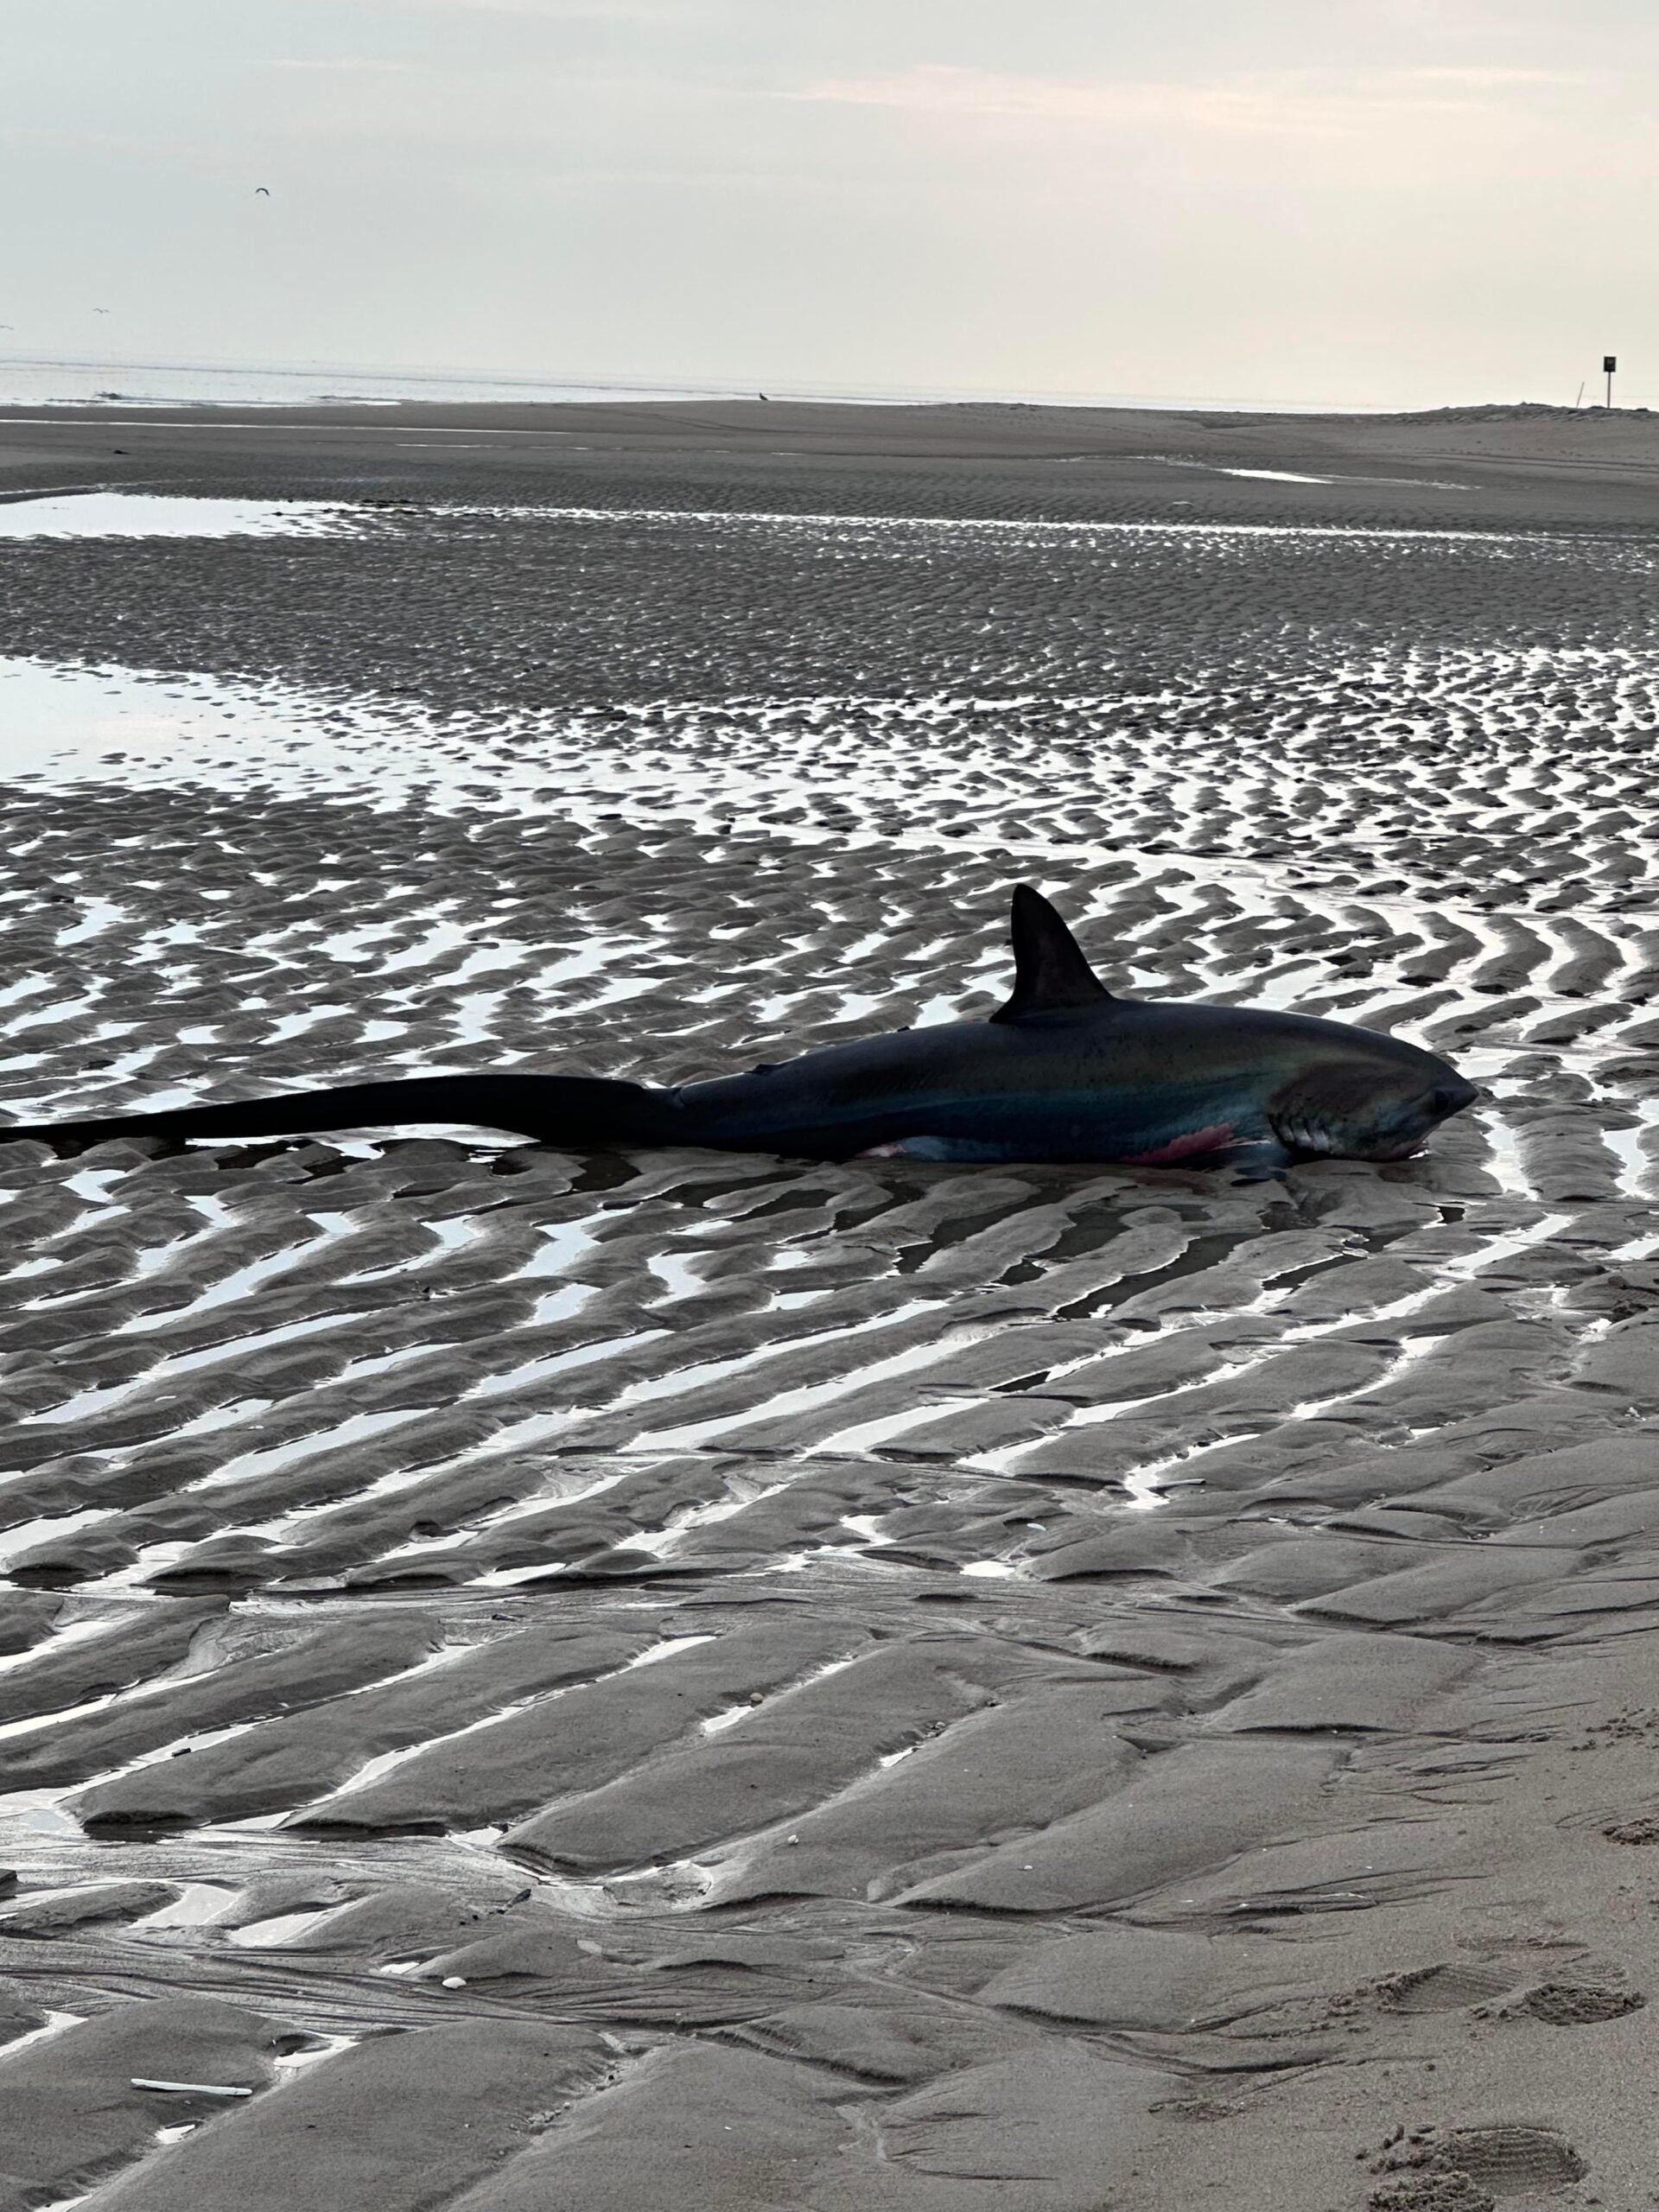 A thresher shark washed up on Crane Beach in Ipswich, Massachusetts.